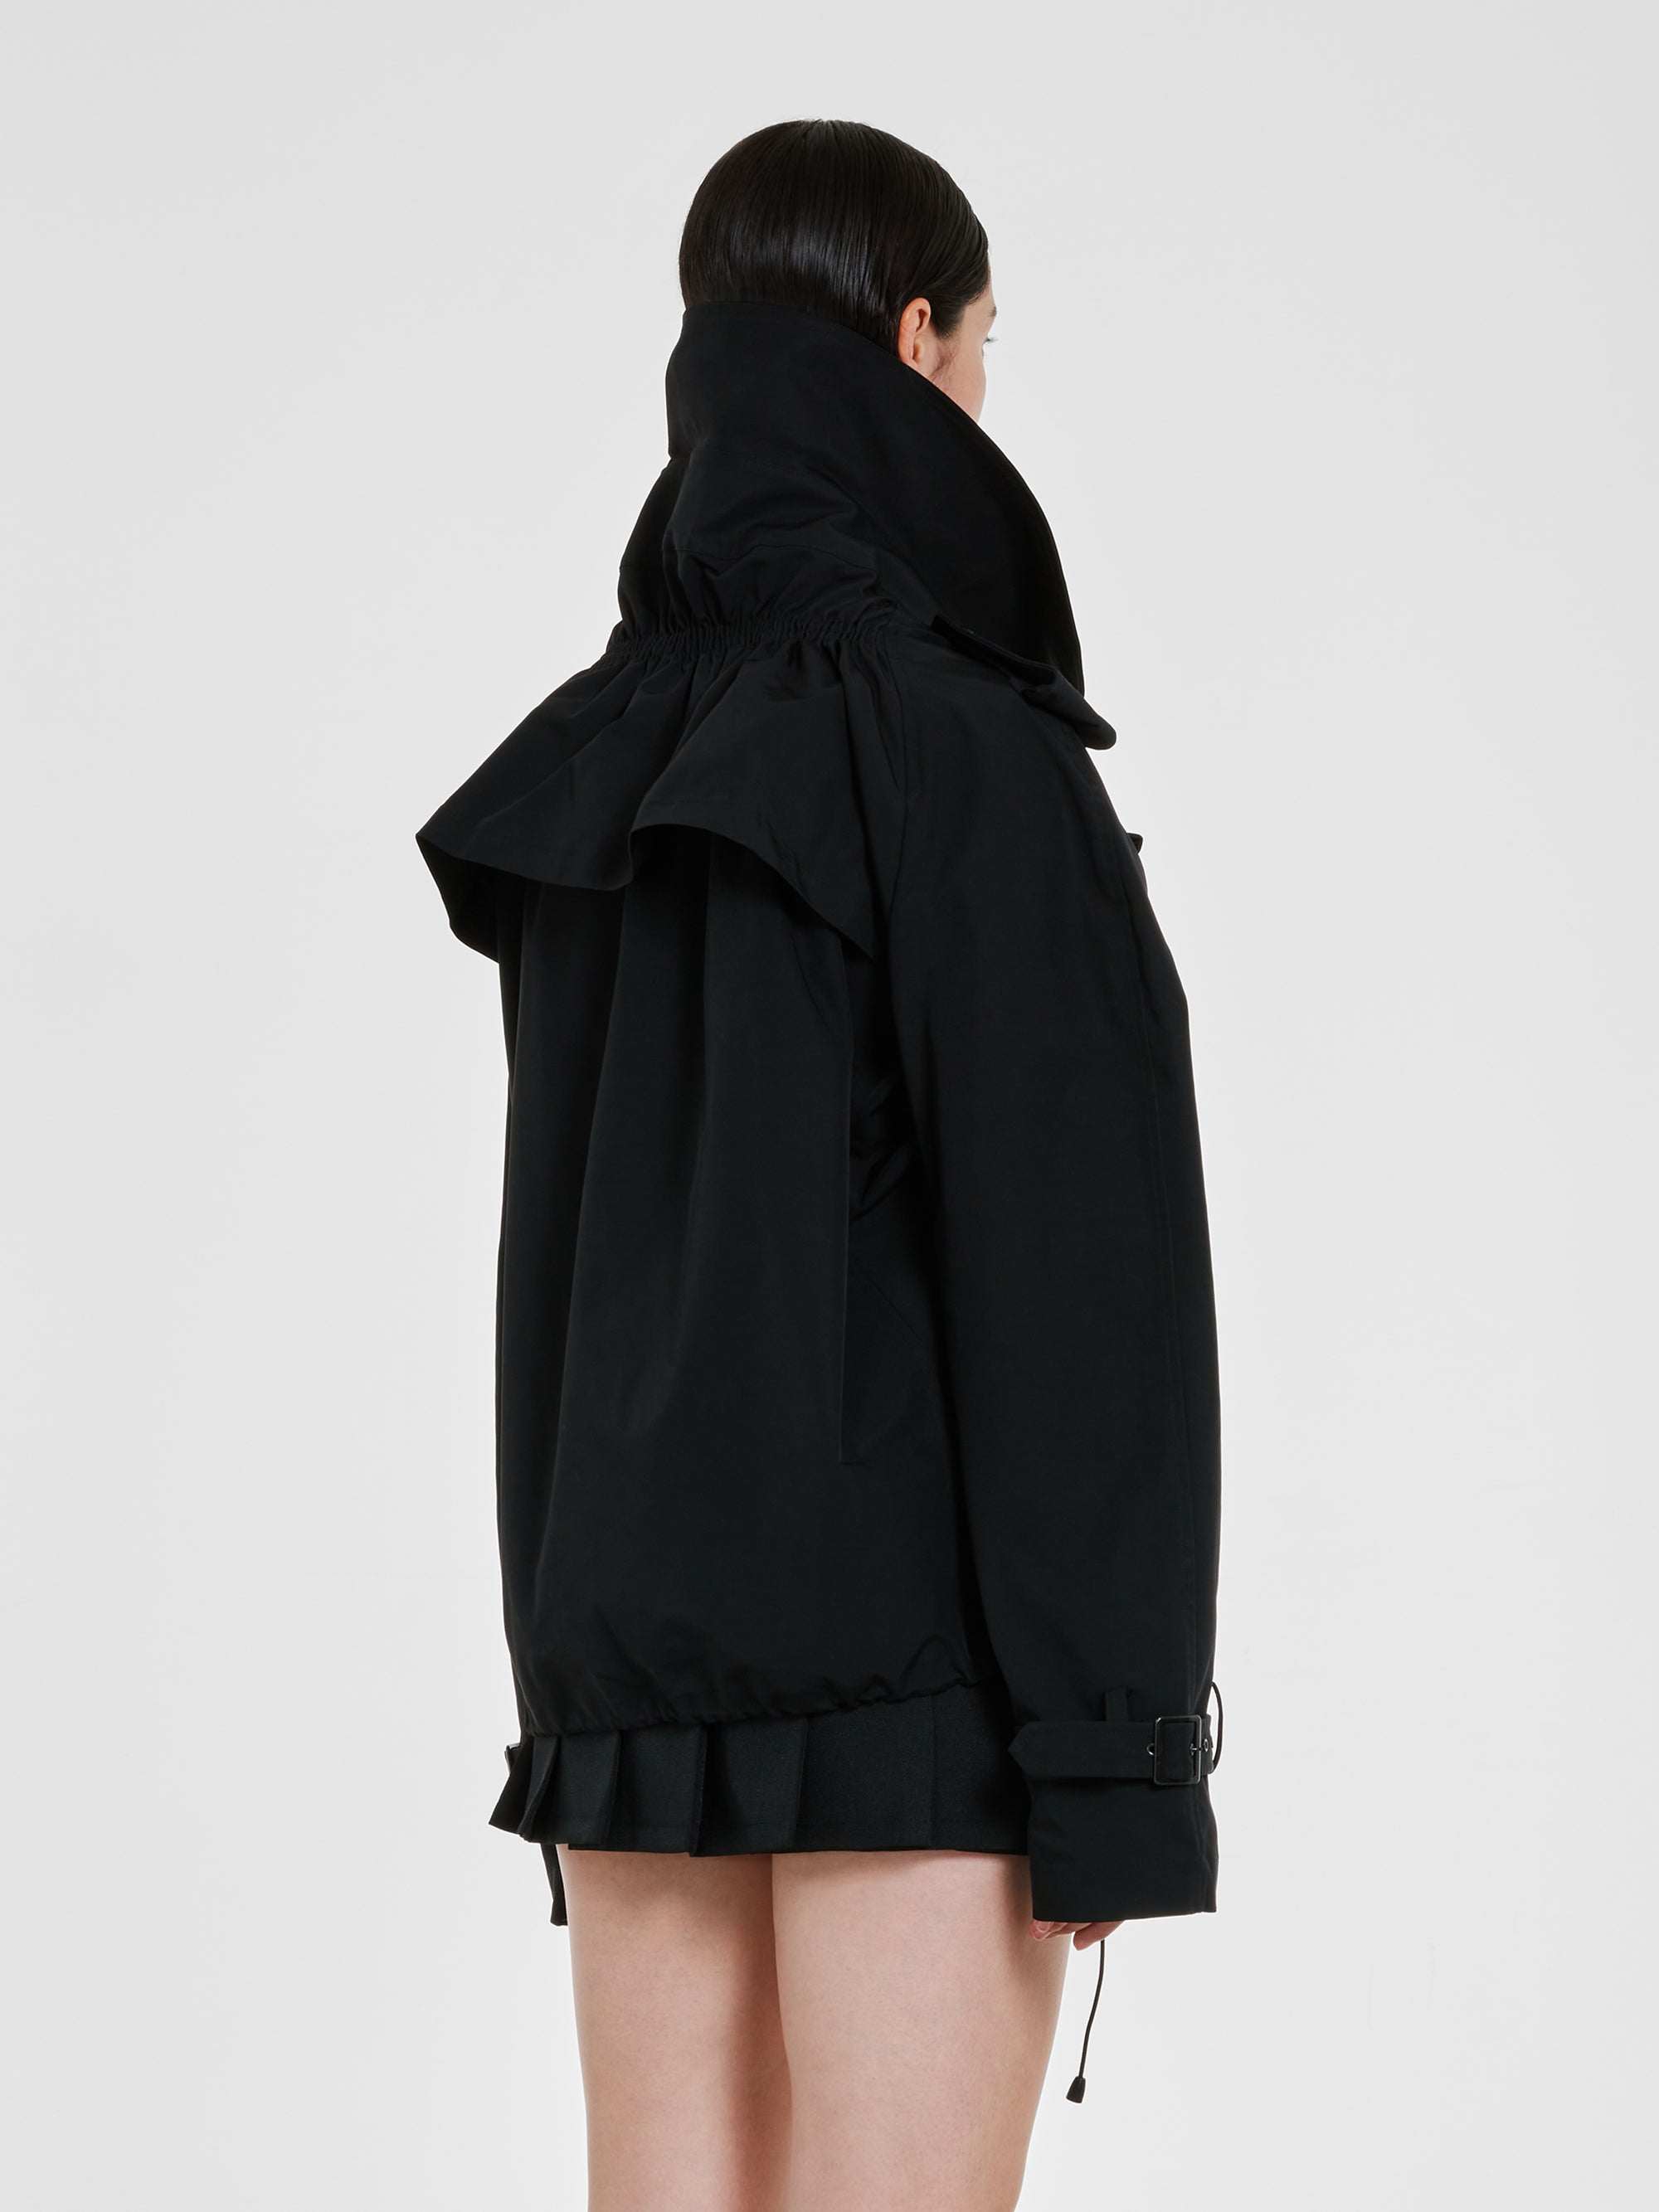 Junya Watanabe - Women's Buttoned Pea Coat - (Black) view 3